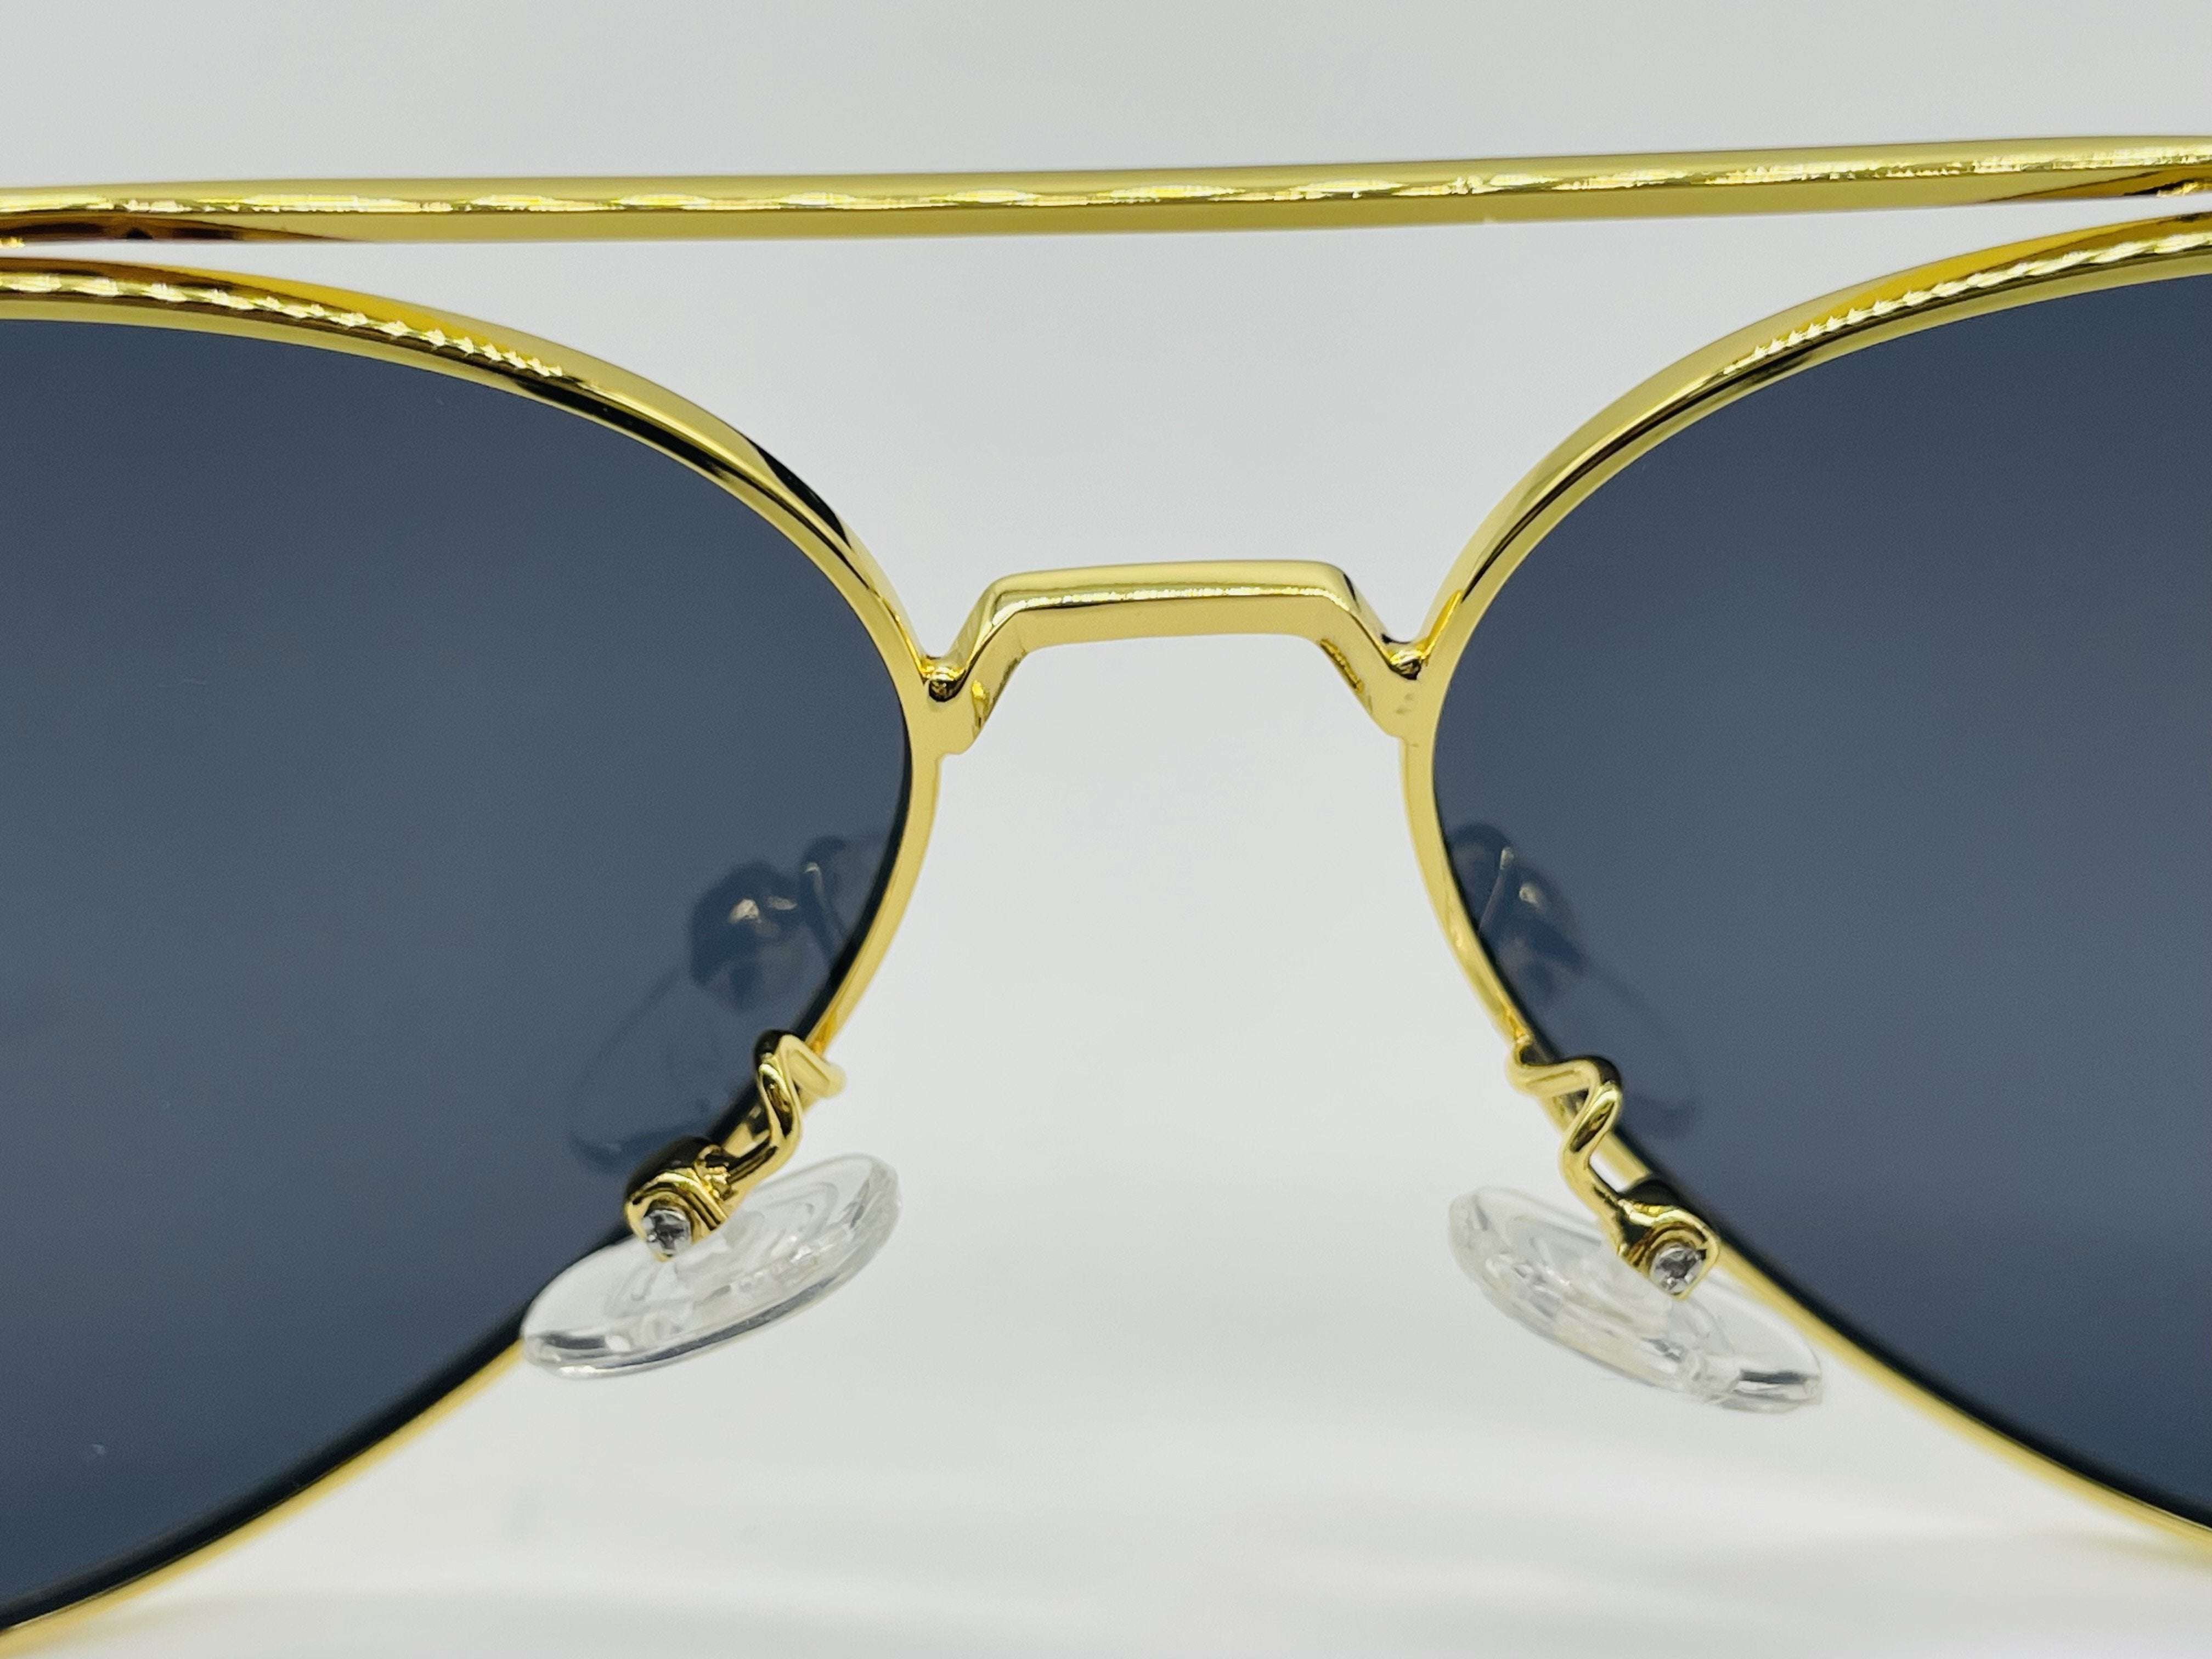 Classic HD Polarized UV400 Aviator Sunglasses Rose-gold